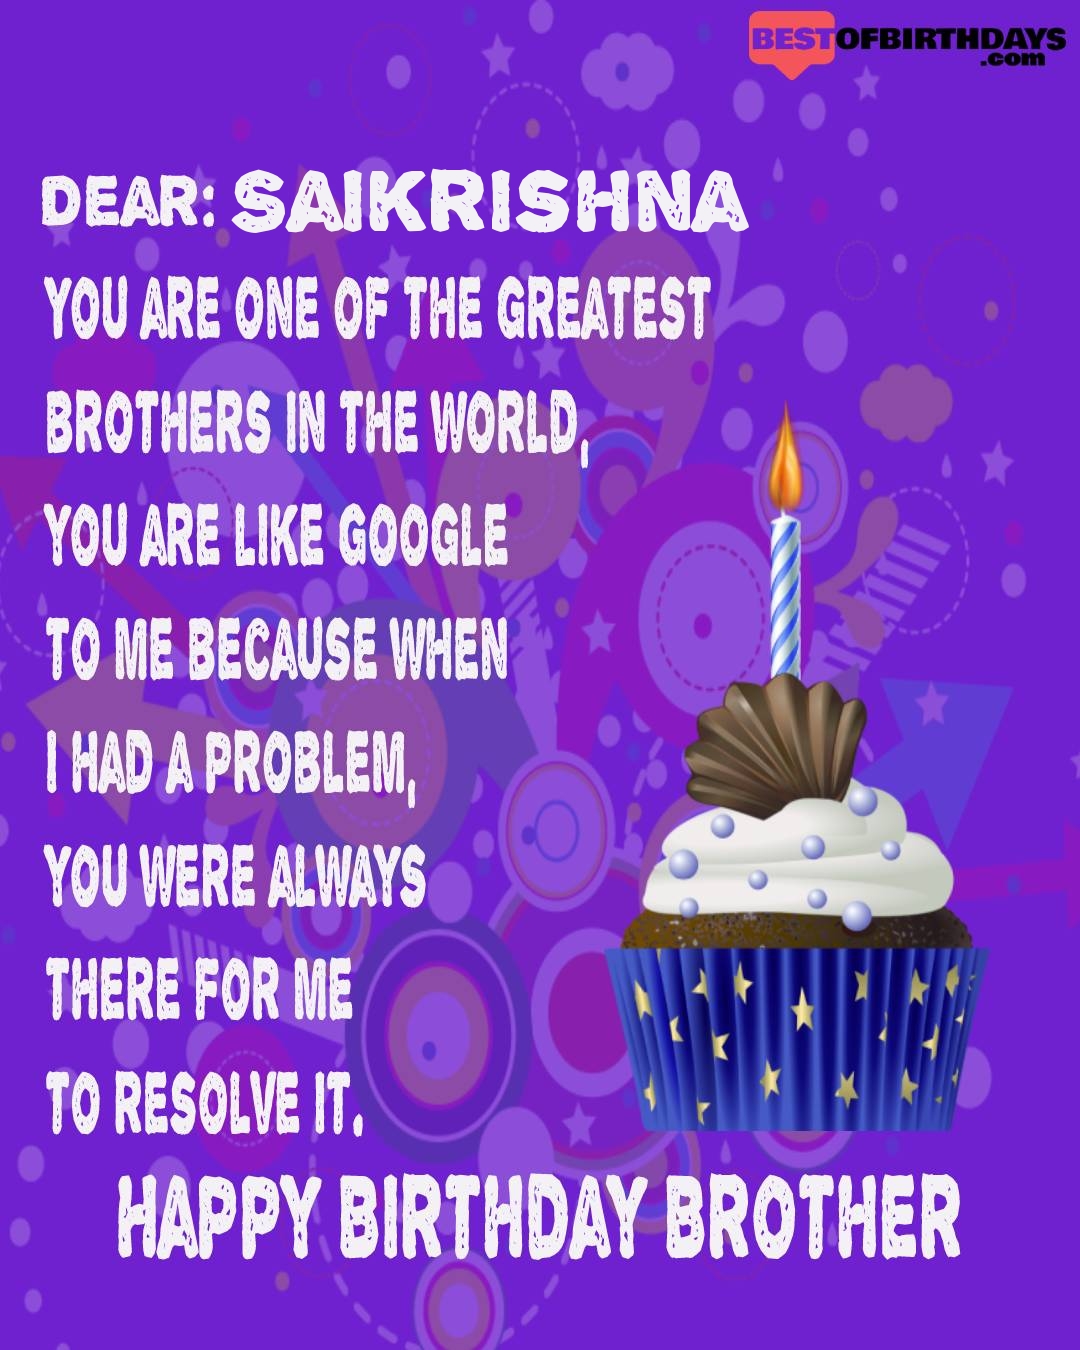 Happy birthday saikrishna bhai brother bro